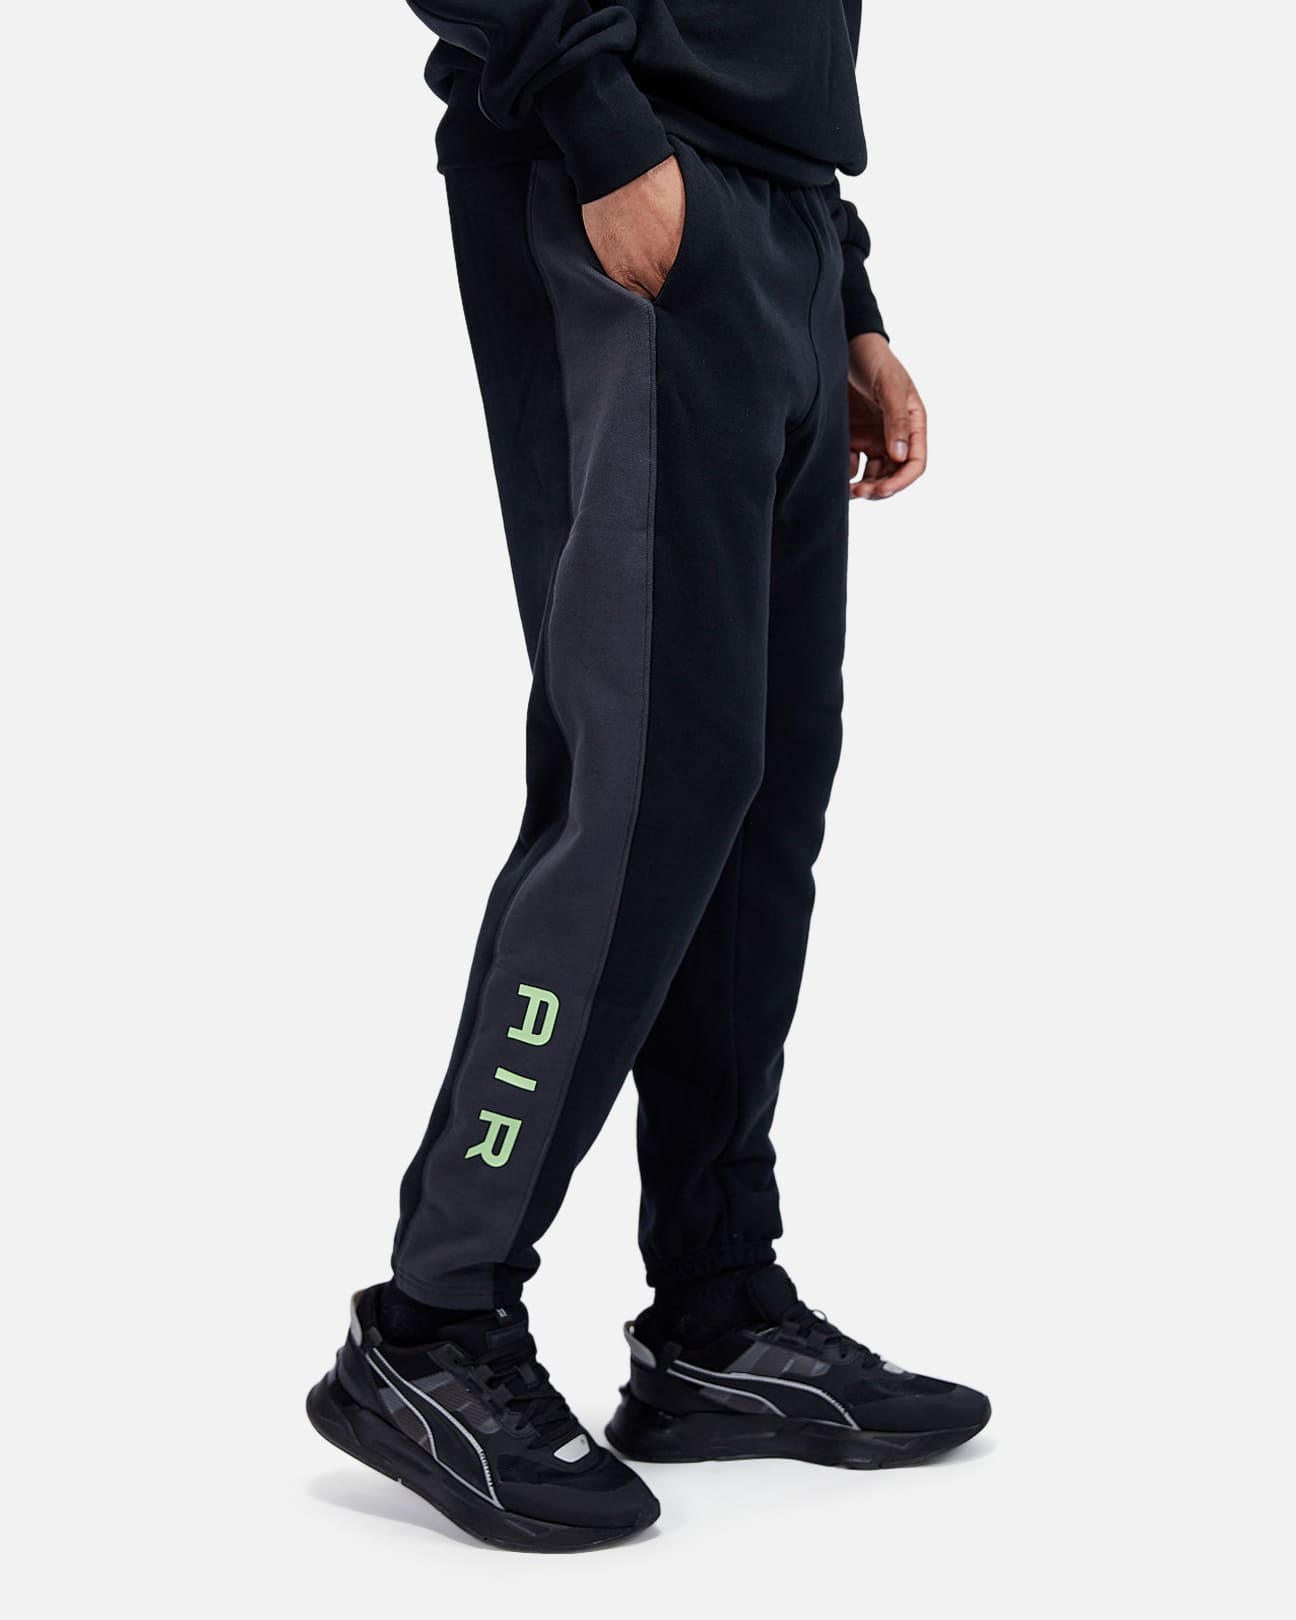 Pantaloni Nike Sportswear Air - neri/grigi/verdi